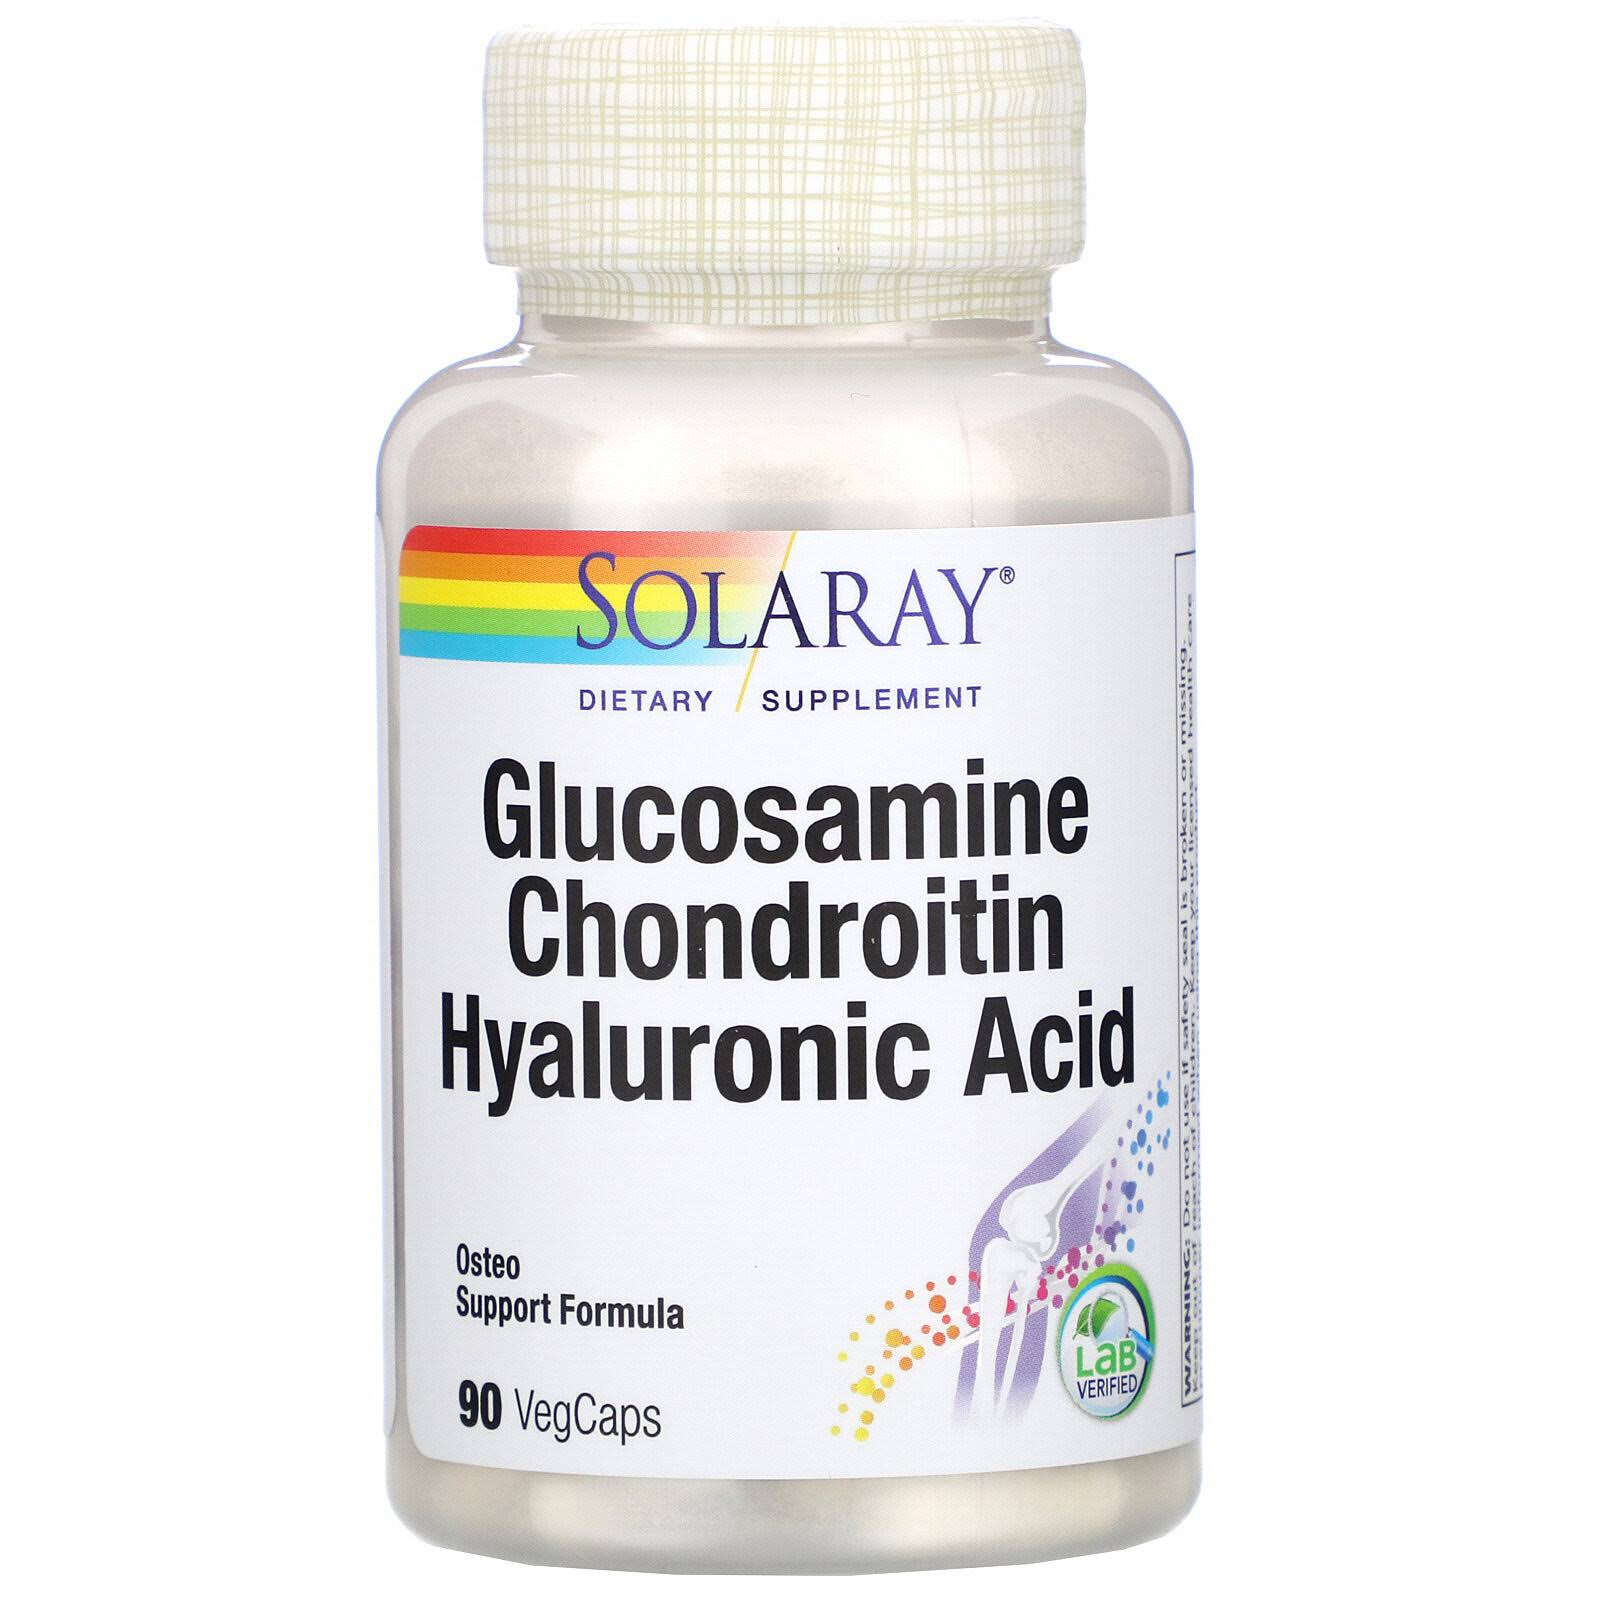 Solaray Glucosamine Chondroitin Hyaluronic Acid Dietary Supplement - 90ct